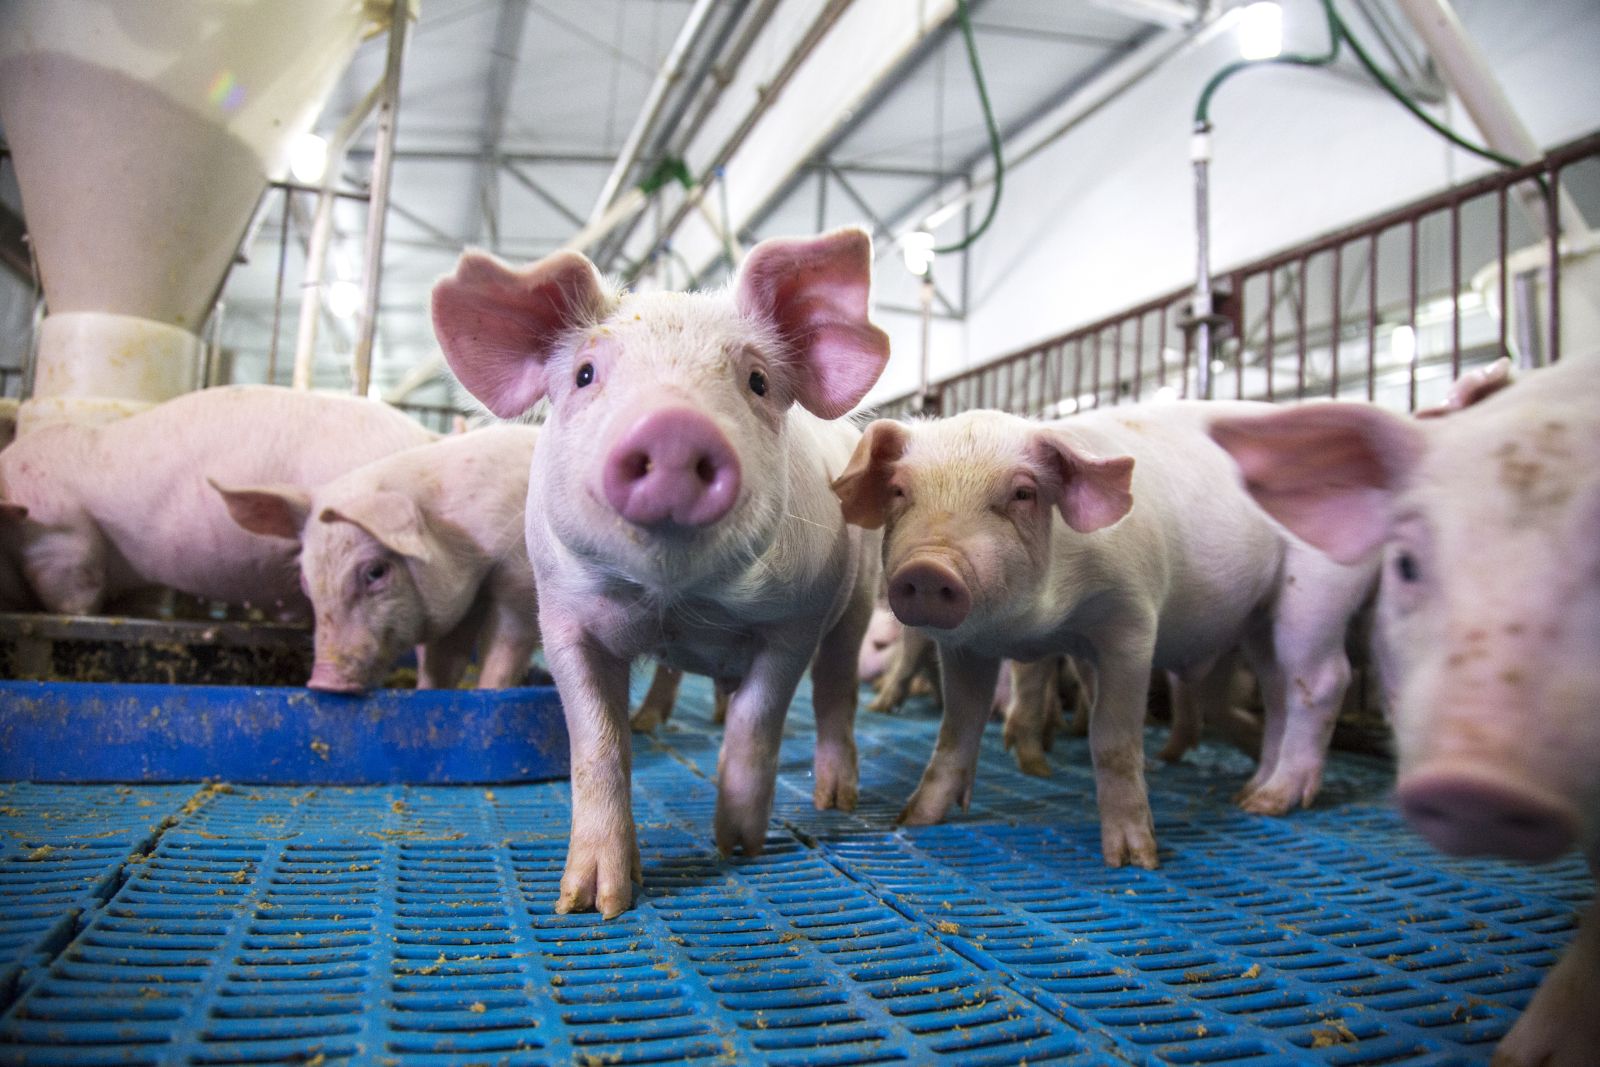 Pigs on a pig farm by artbyPixel via iStock